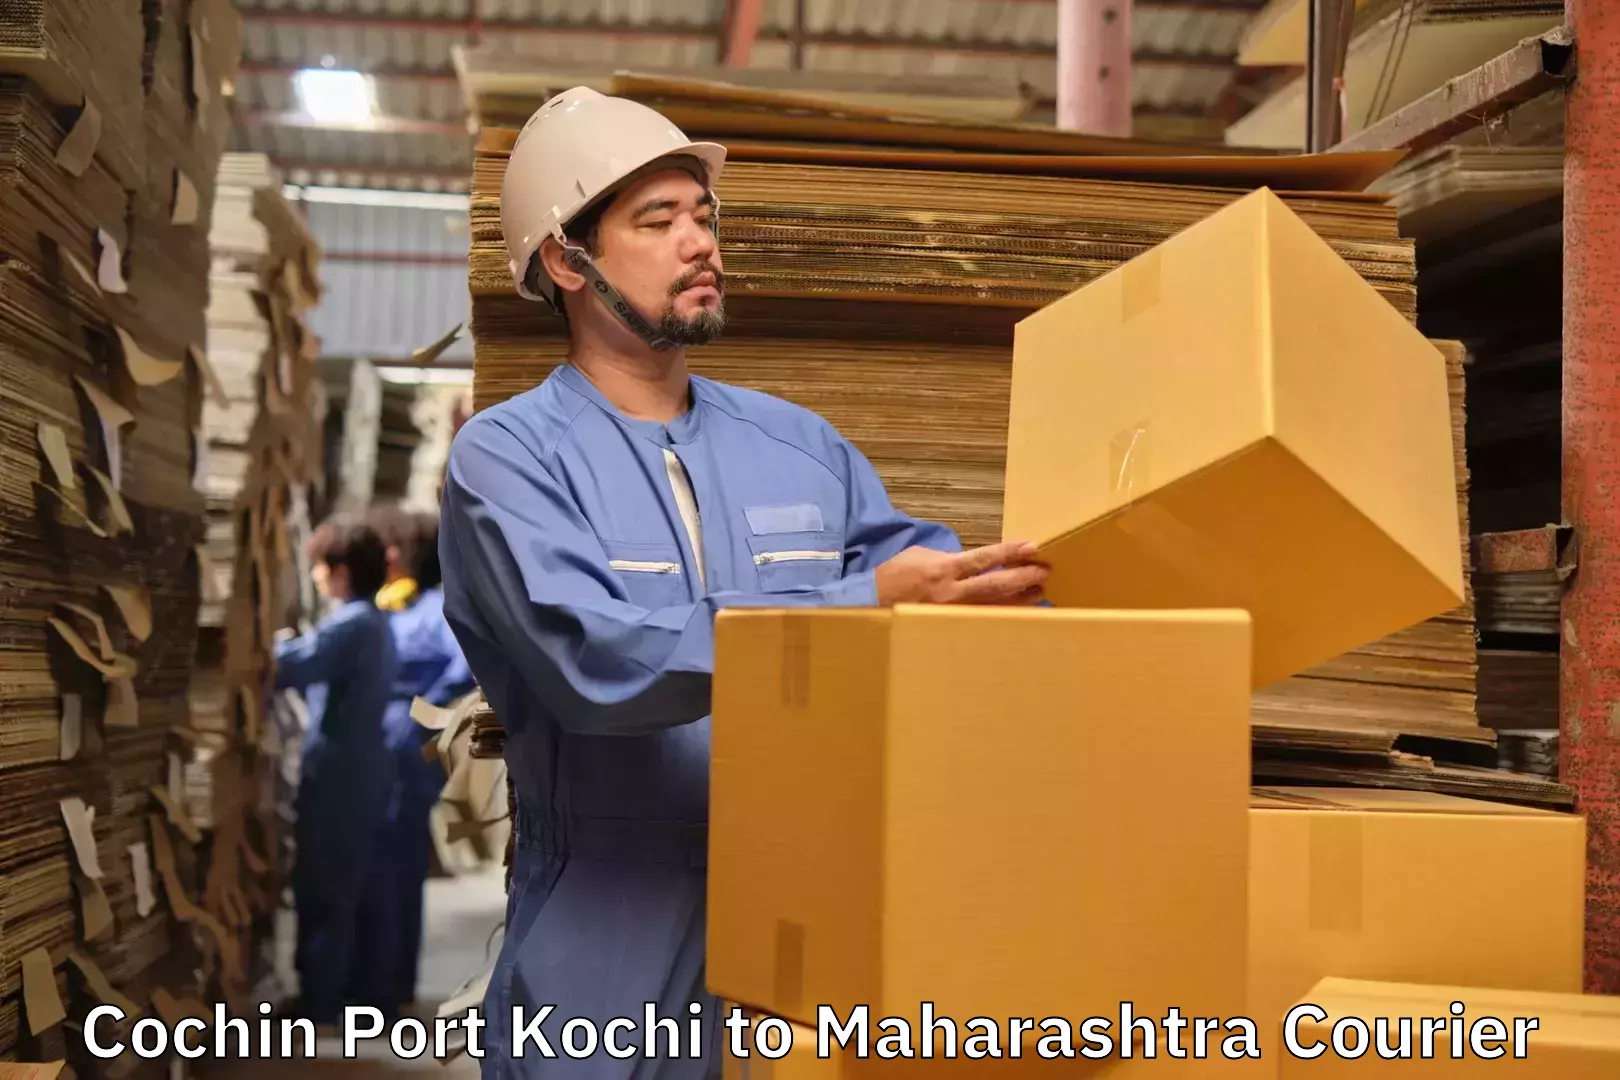 Luggage transport company Cochin Port Kochi to Mandrup